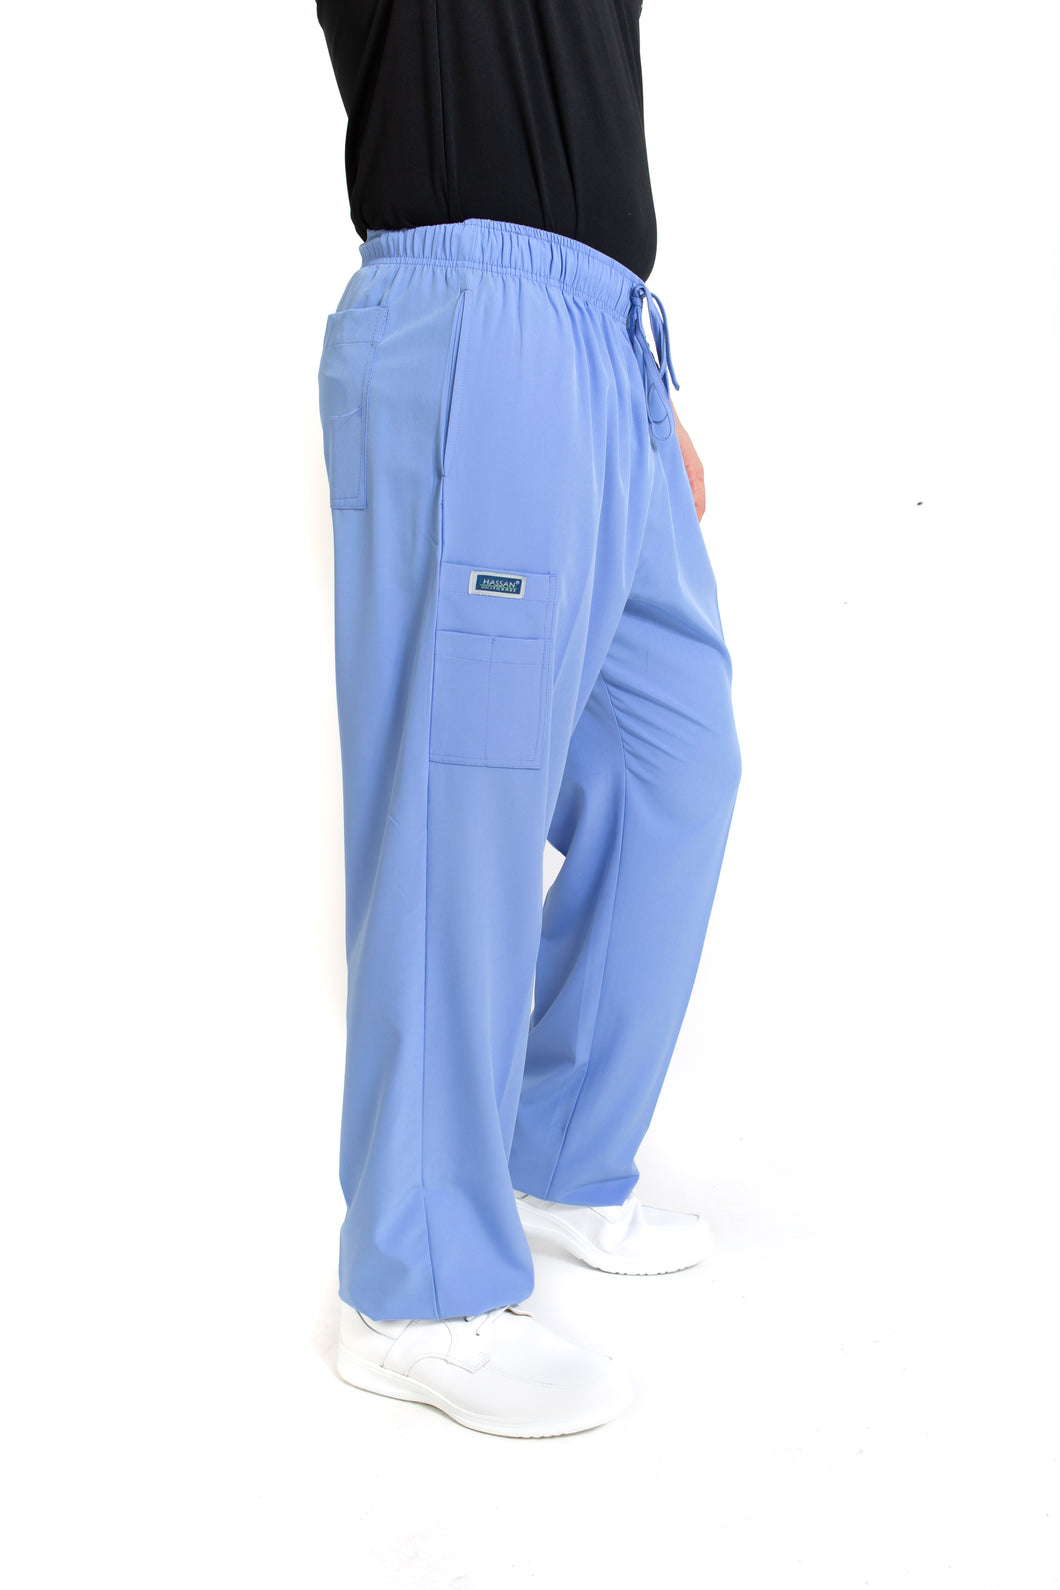 Pantalón Pant EA-02P REPELENTE A FLUIDOS-Color FRANCIA HOMBRE-HASSAN Uniformes